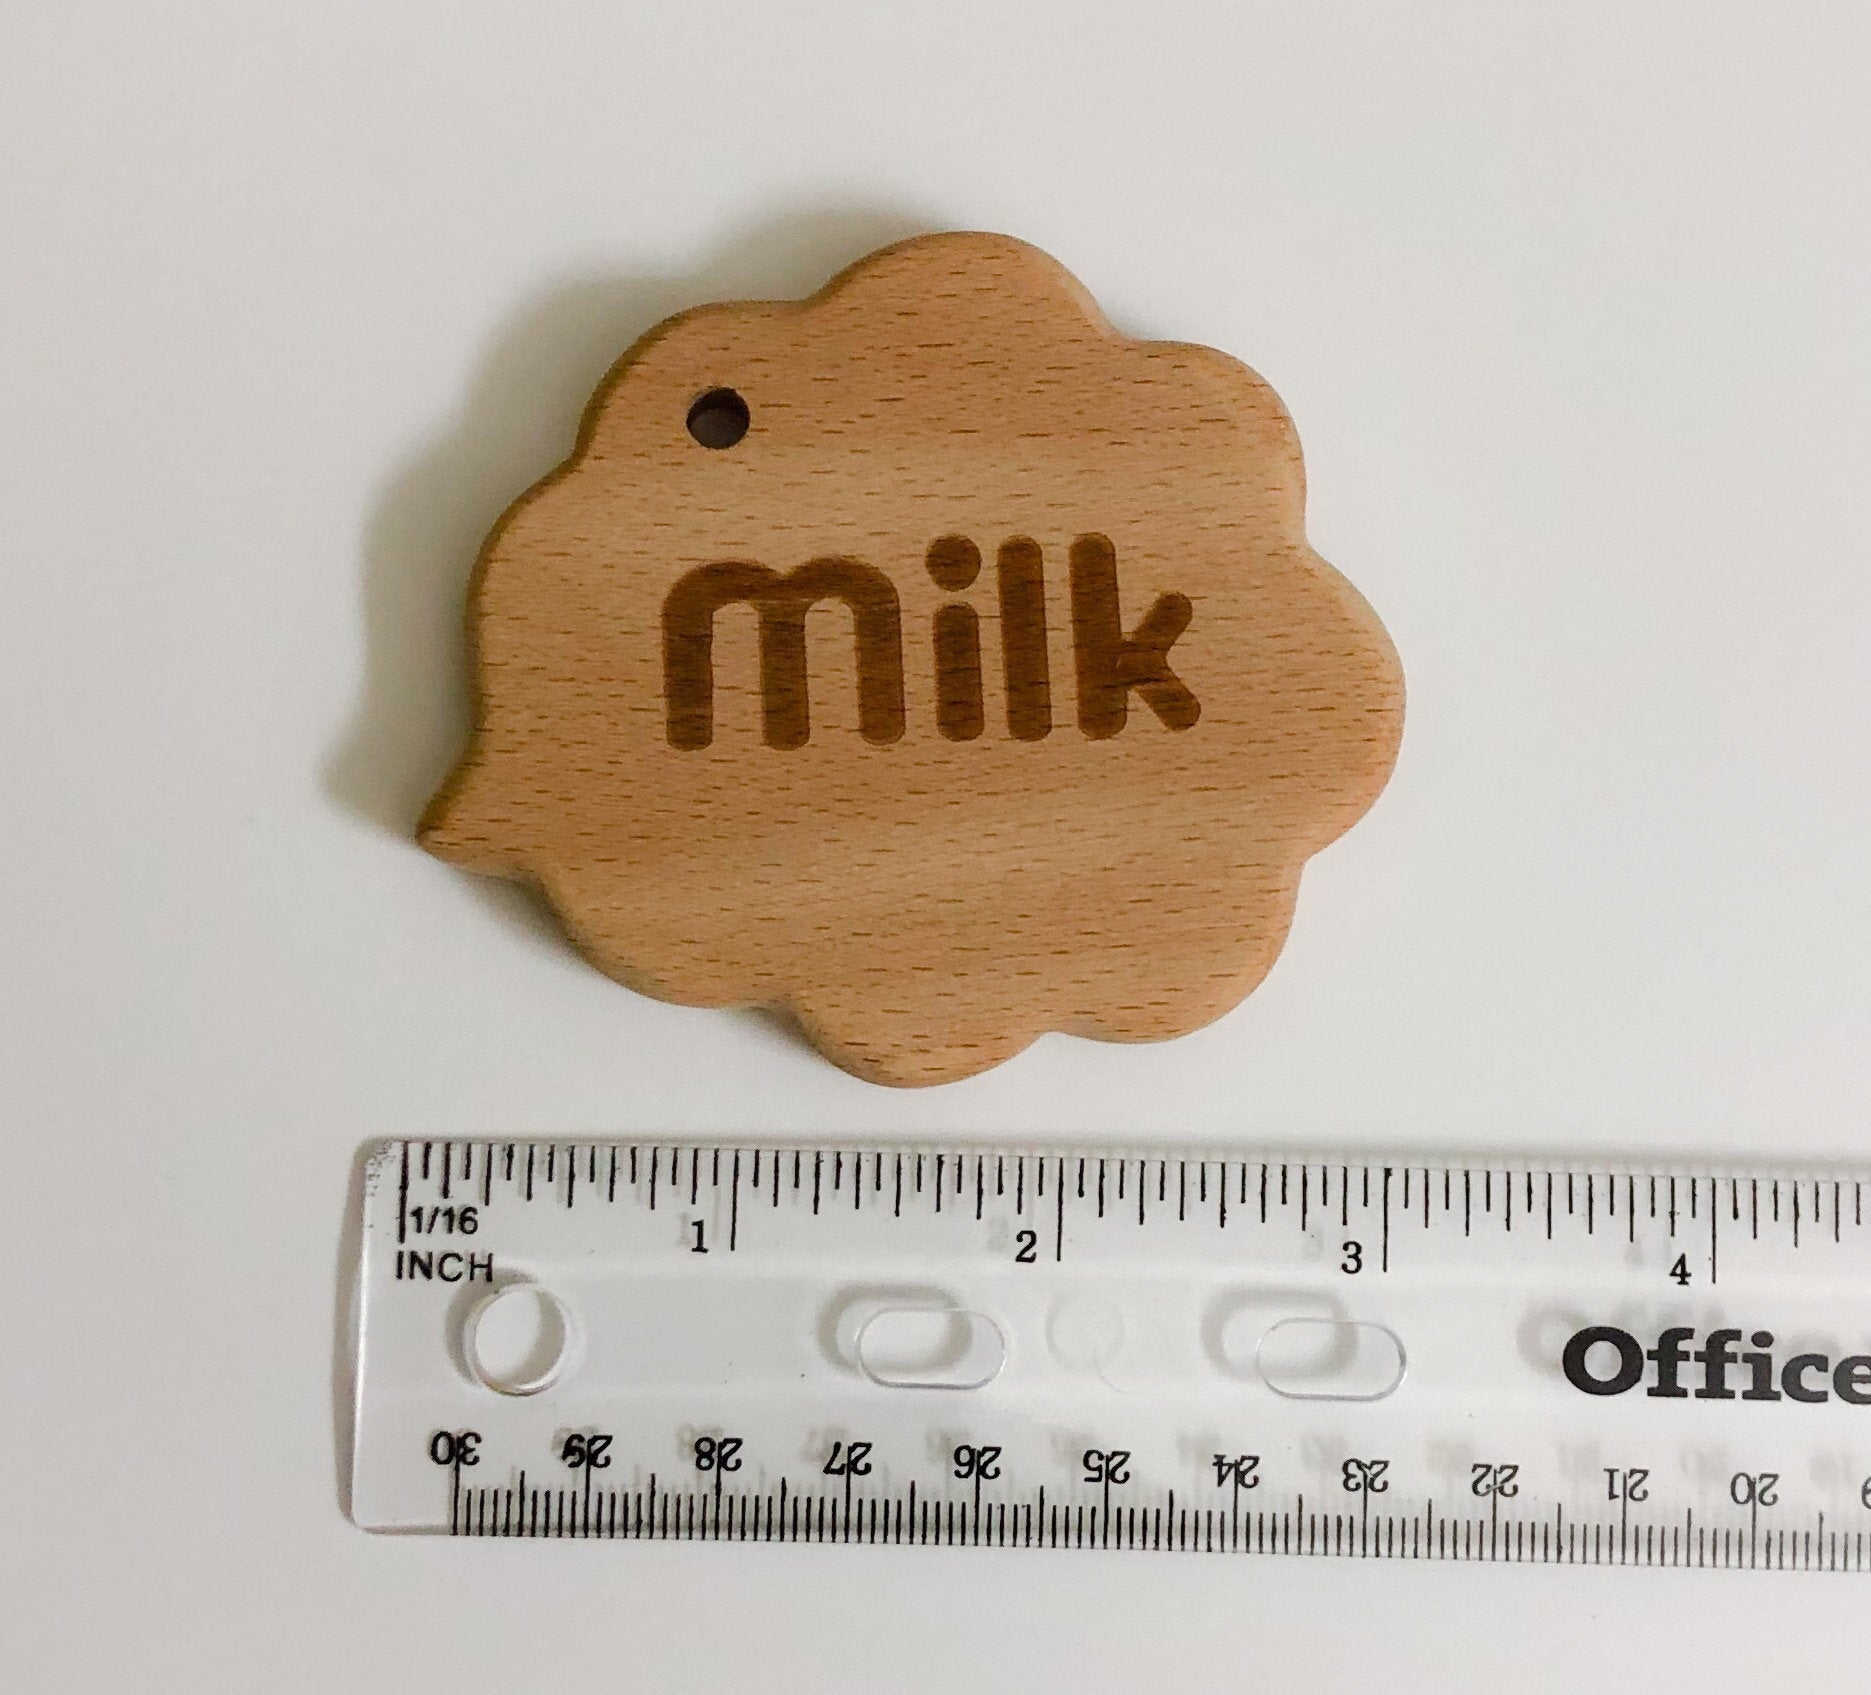 Milk Speech Bubble Emoticon Wood Teether